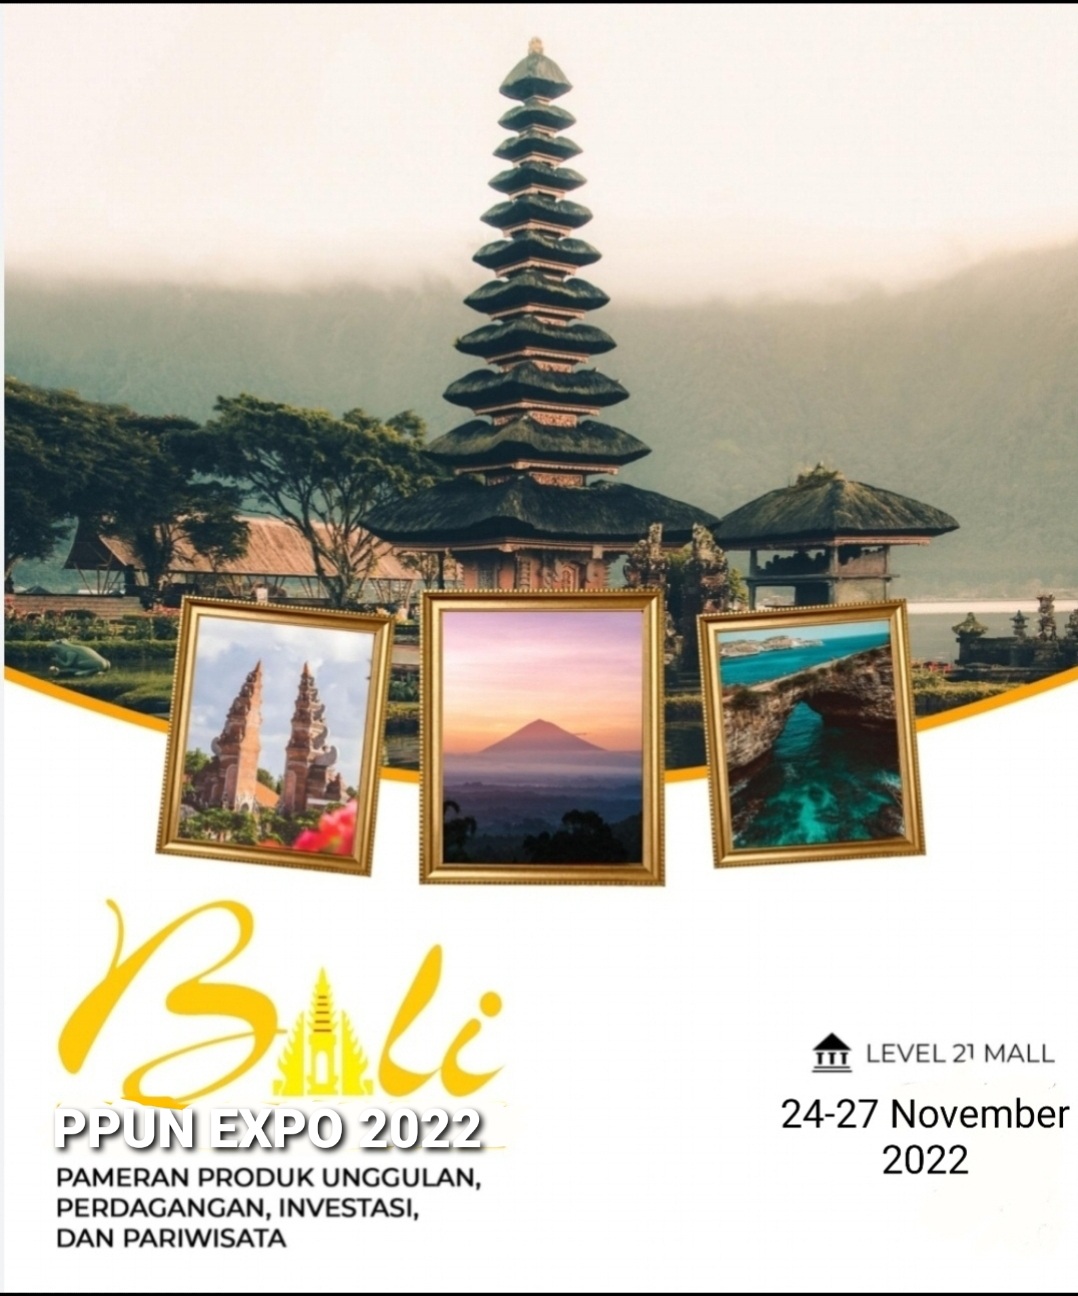 Pameran Nasional: Bali PPUN Expo 2022